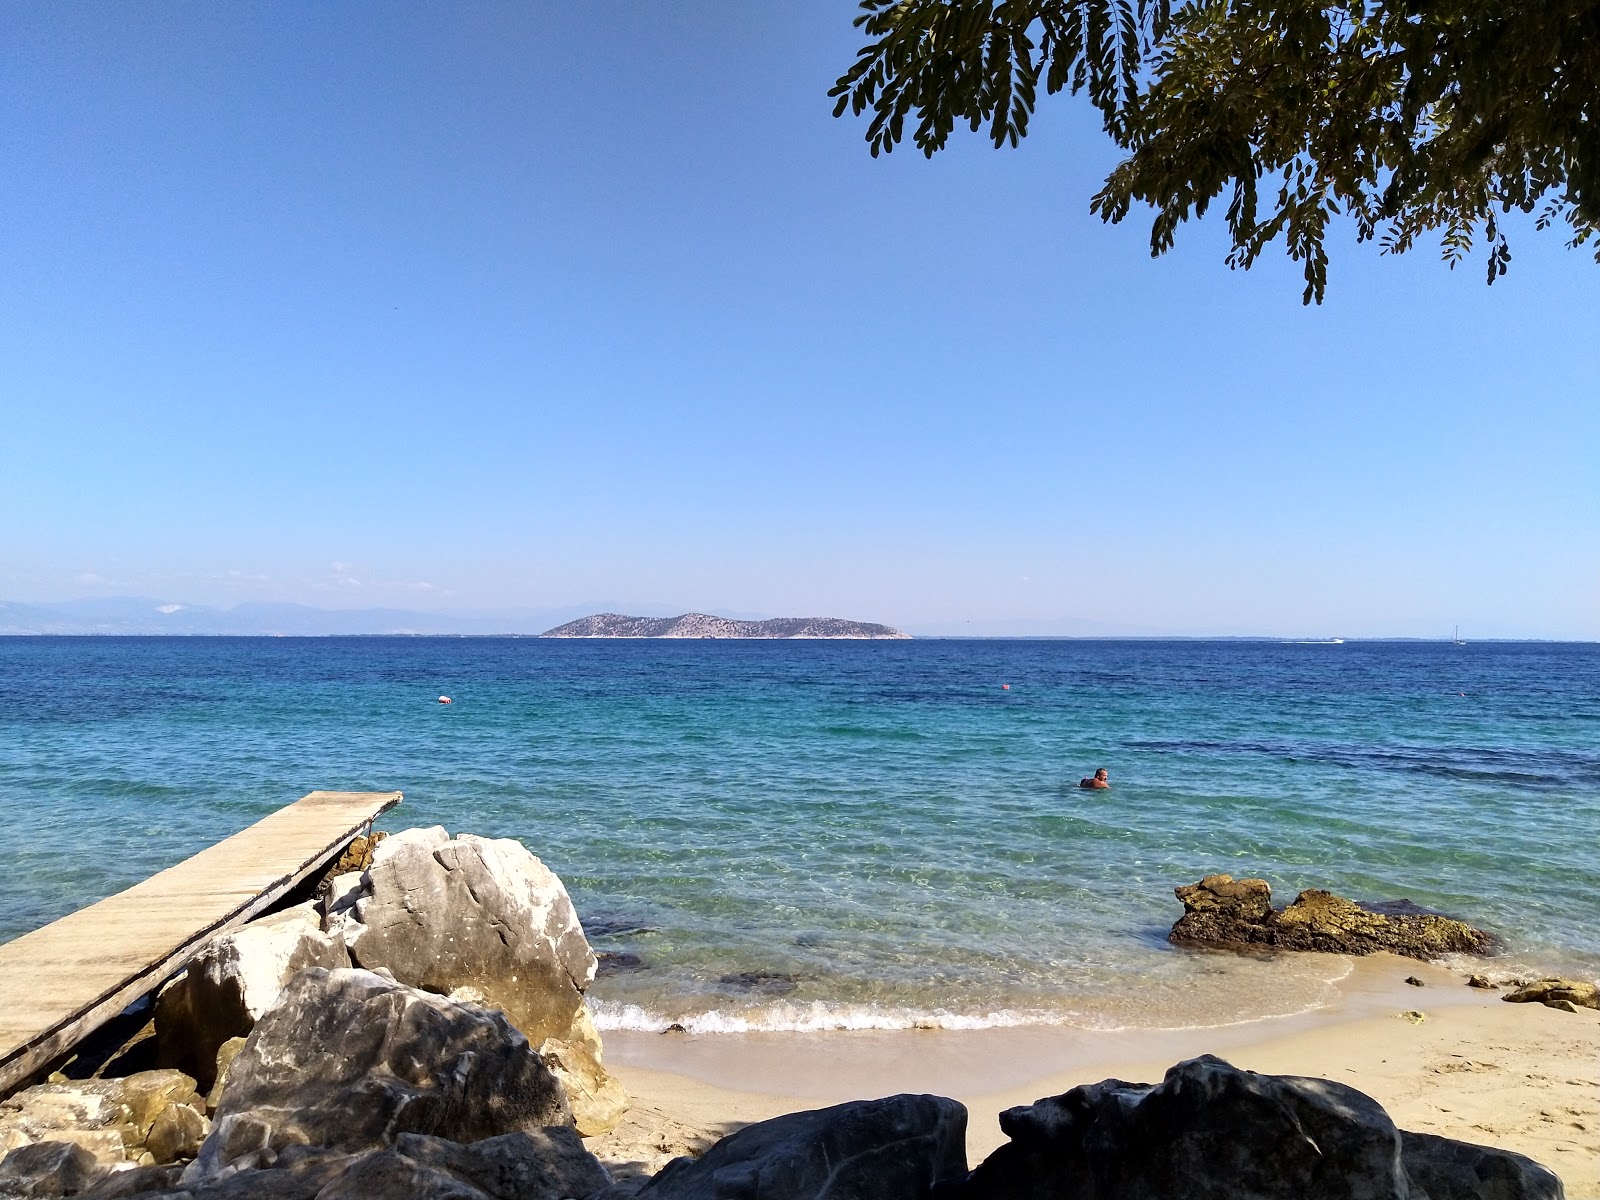 Zdjęcie Tarsanas beach i osada